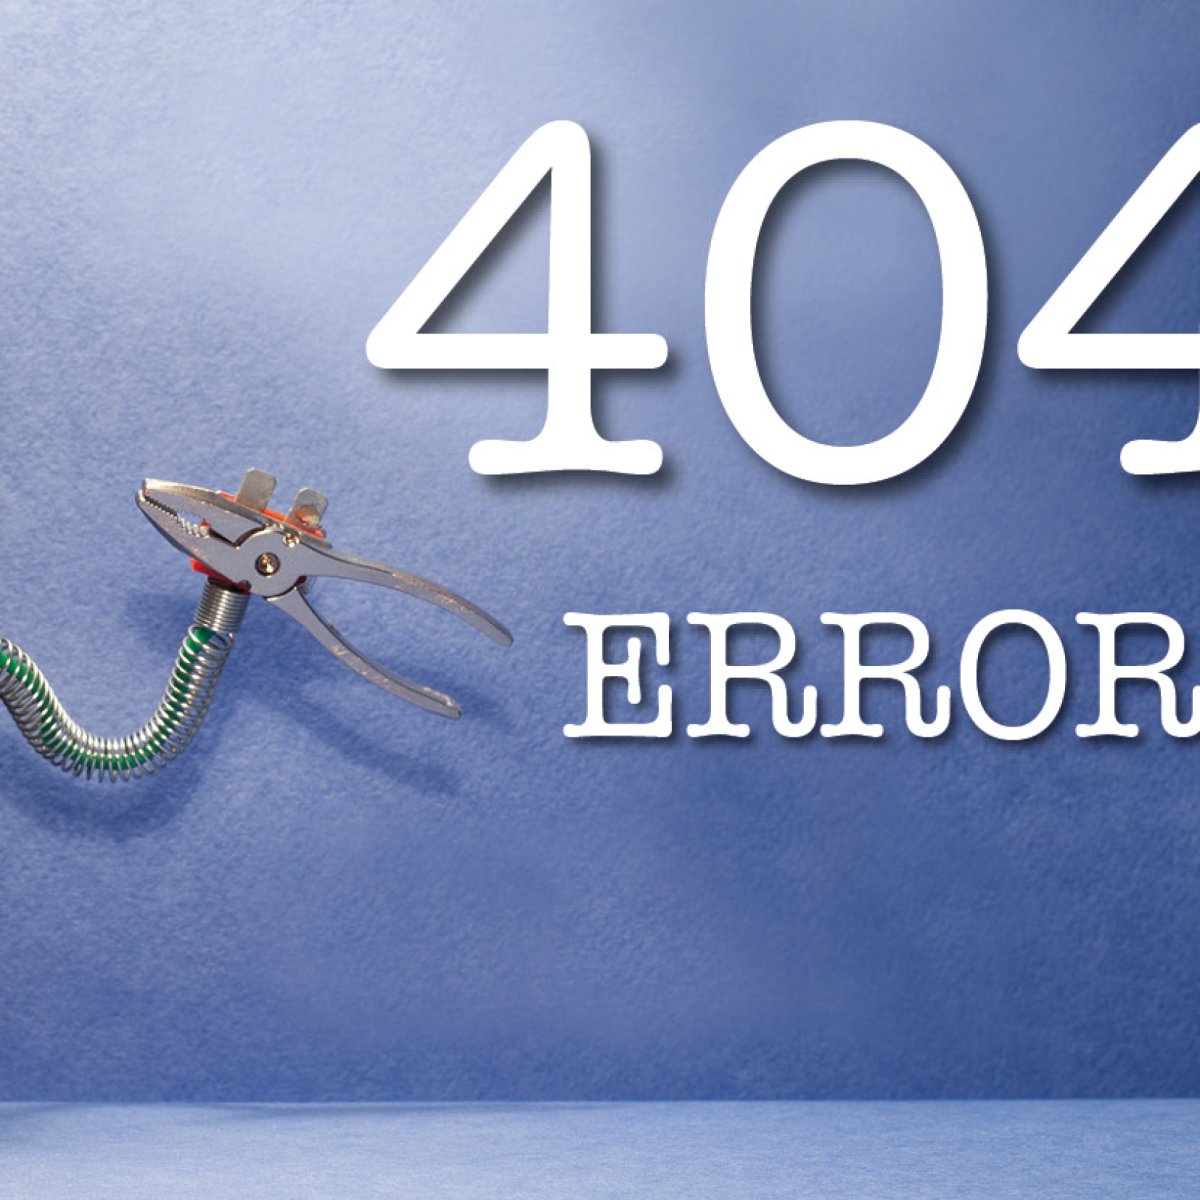 Imagebild – 404 ERROR GB